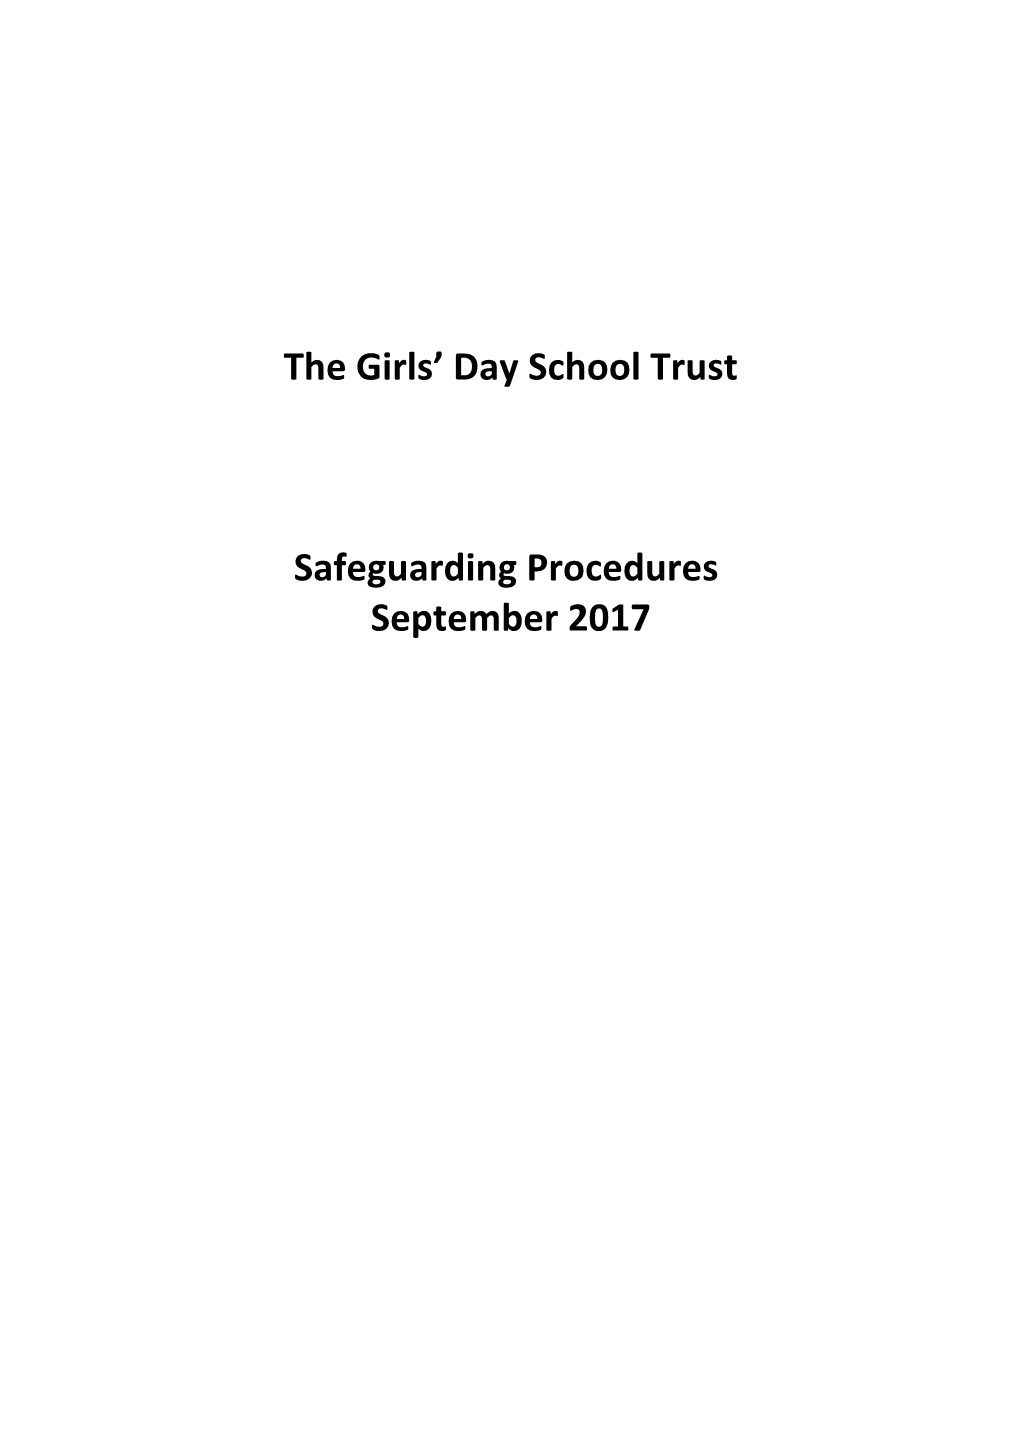 The Girls Day School Trust